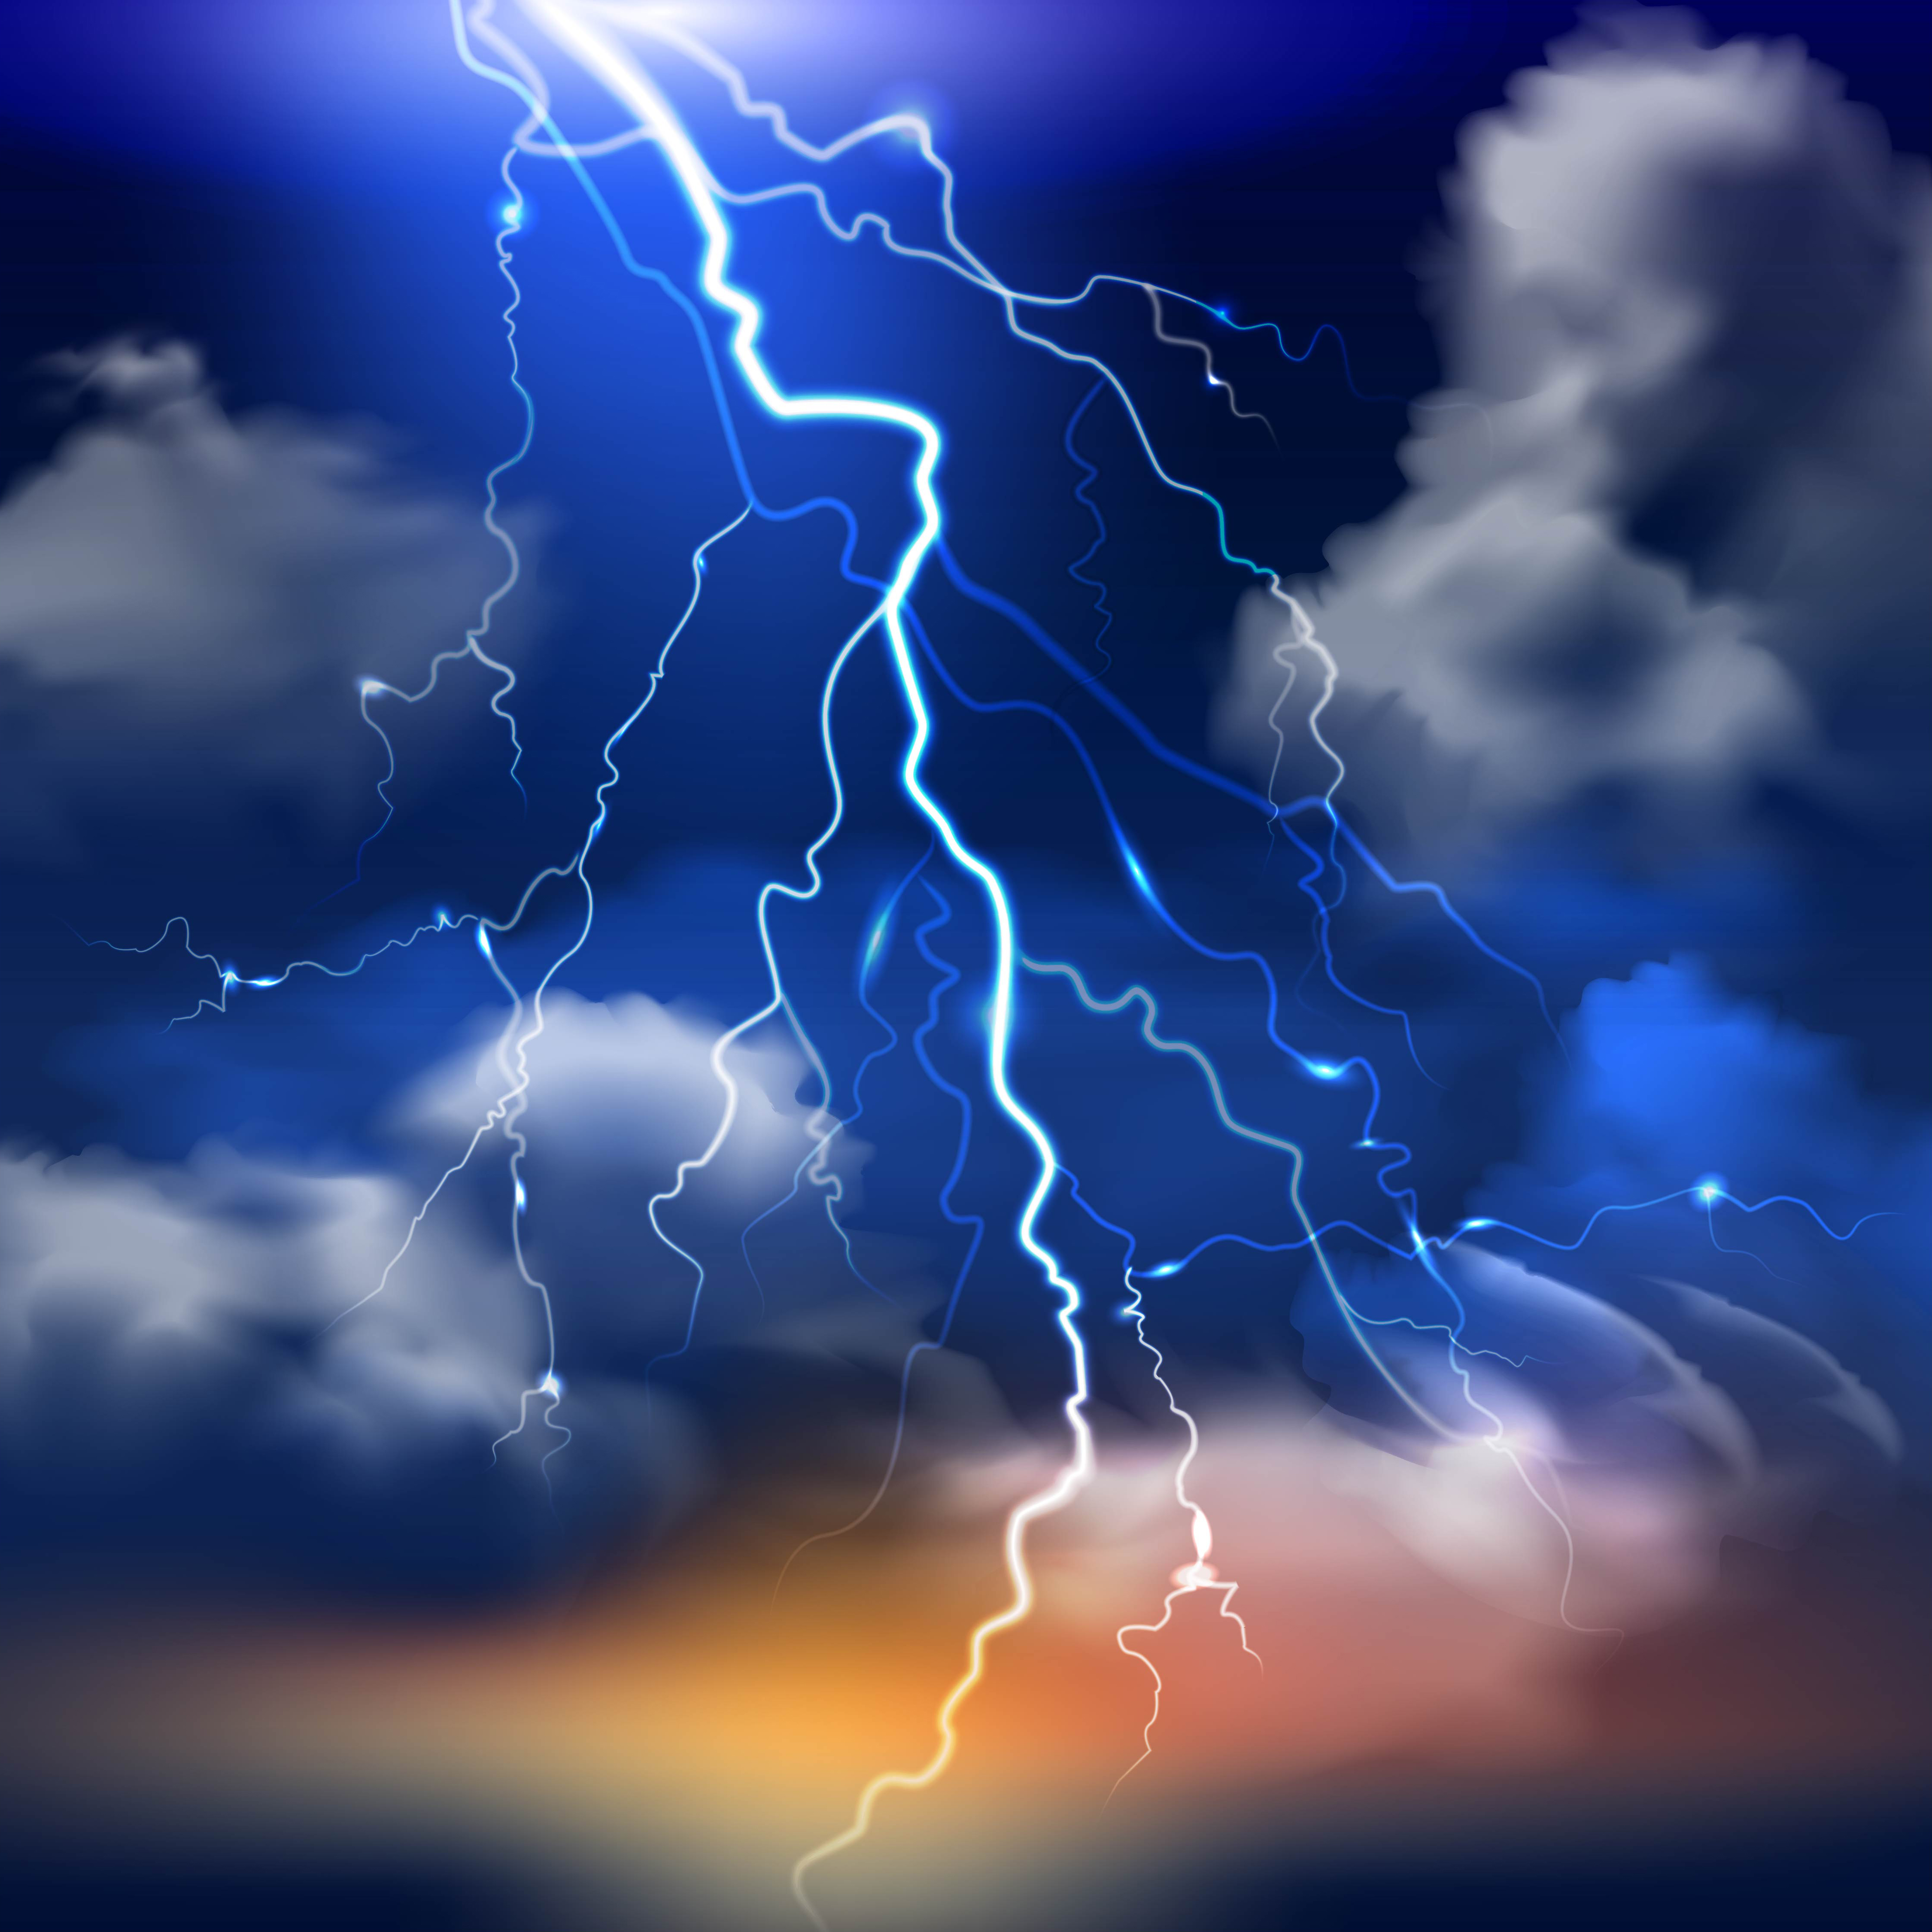 Lightning Cloud Drawing - Thunderstorm Cloud Hand Drawn Royalty Free ...